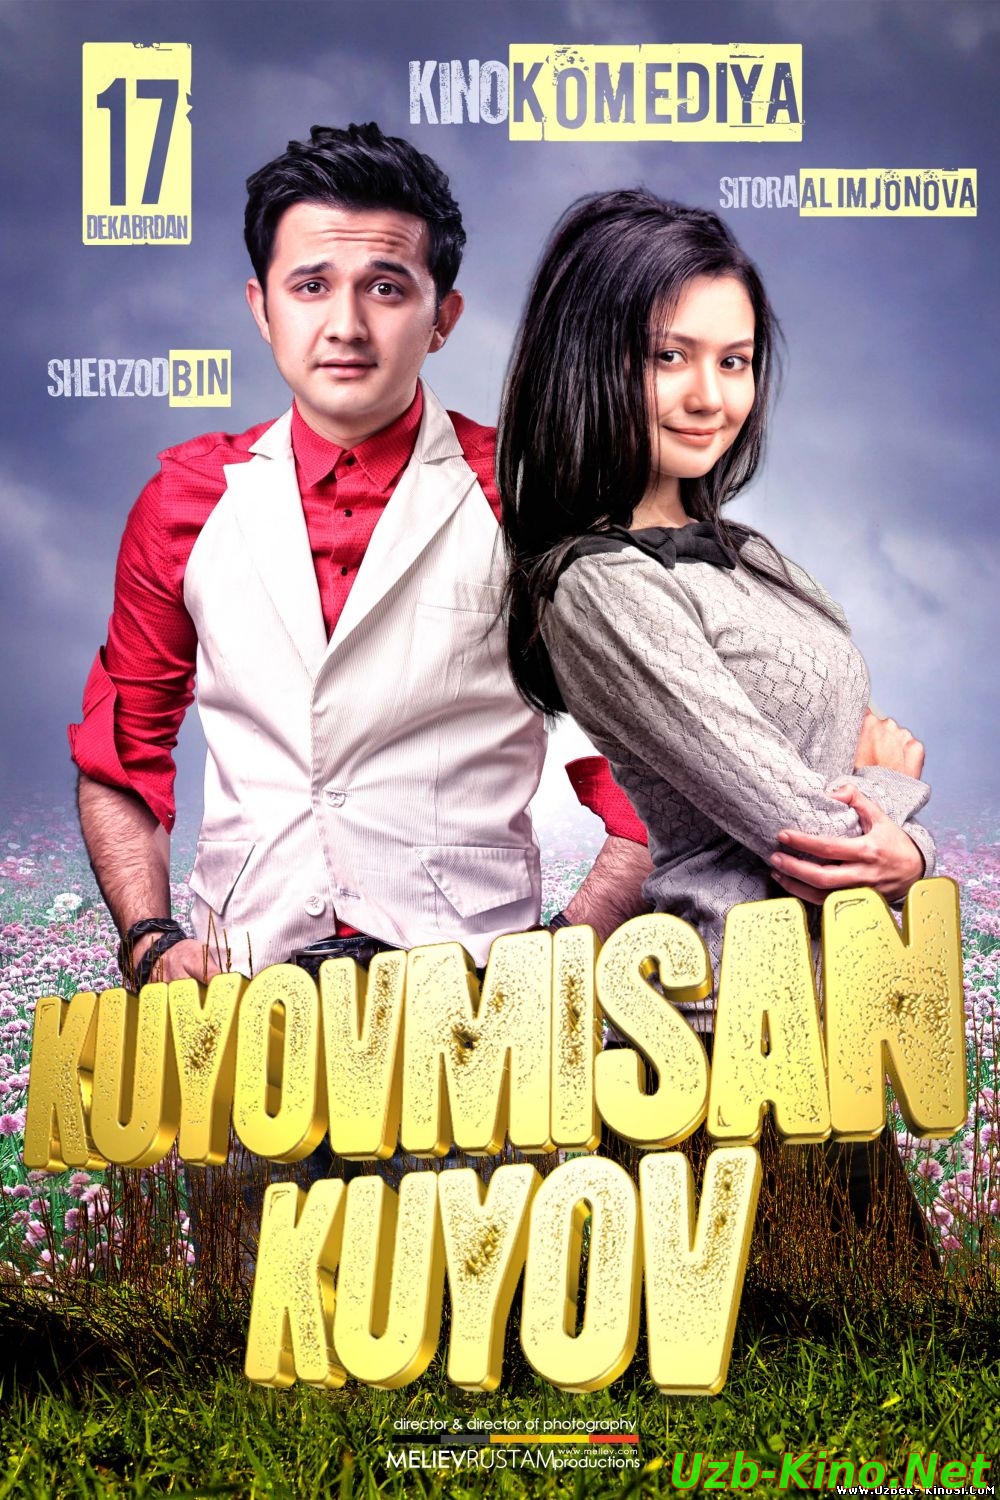 Kuyovmisan Kuyov КУЙОВМИСАН КУЙОВ Yangi Uzbek Kino 2015 25 Июля 2015 Yangi Uzbek Kinolar